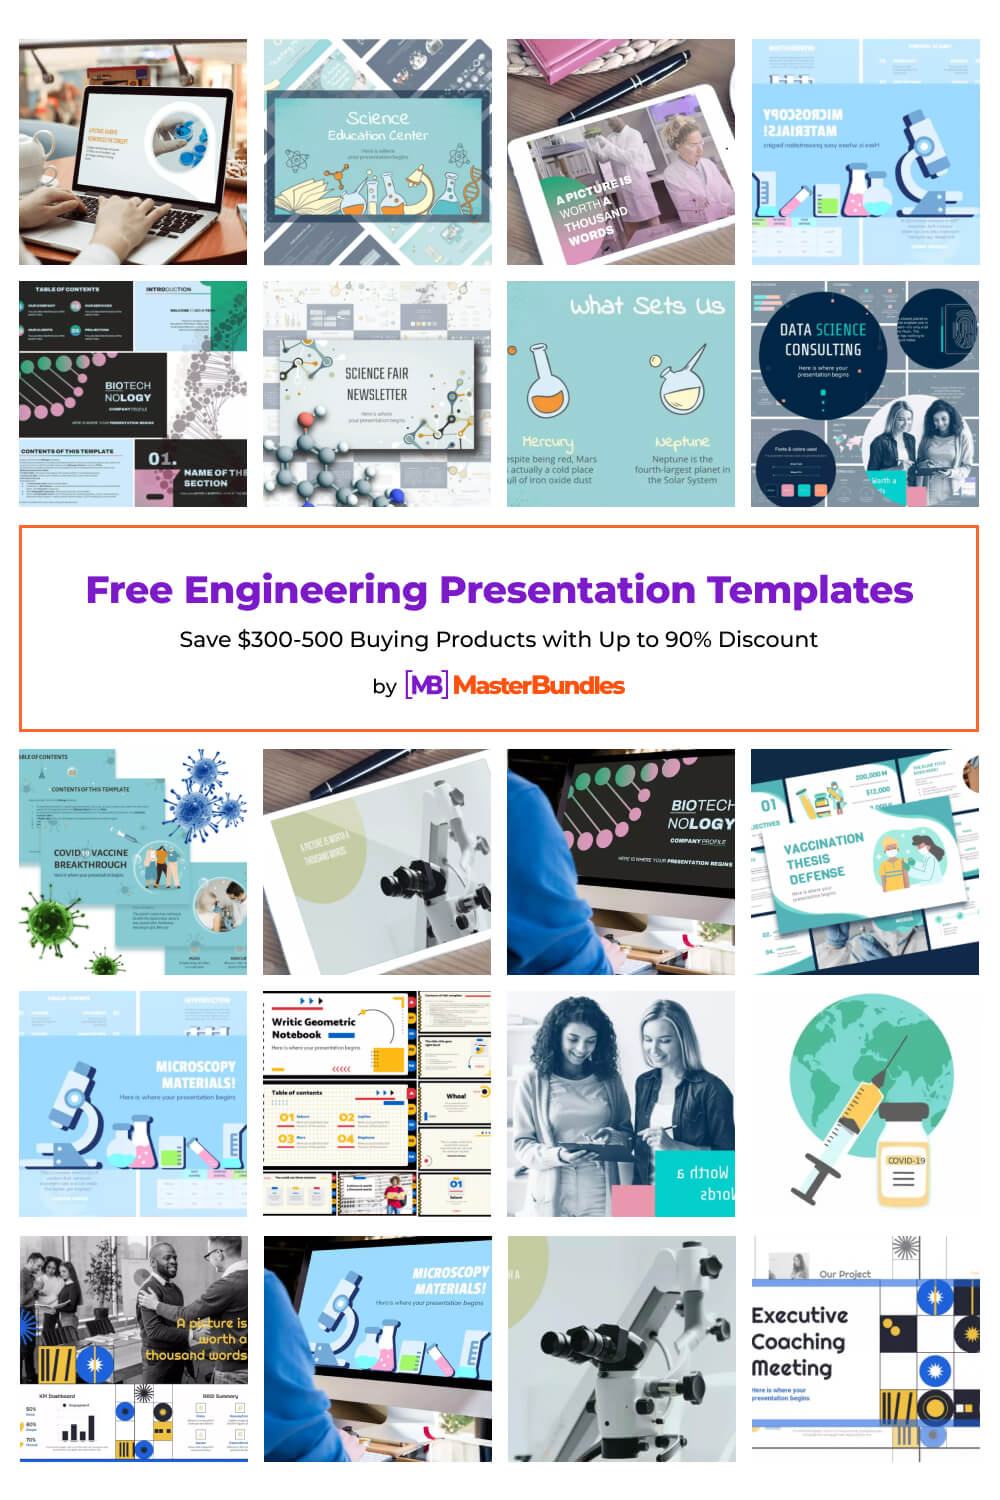 free engineering presentation templates pinterest image.